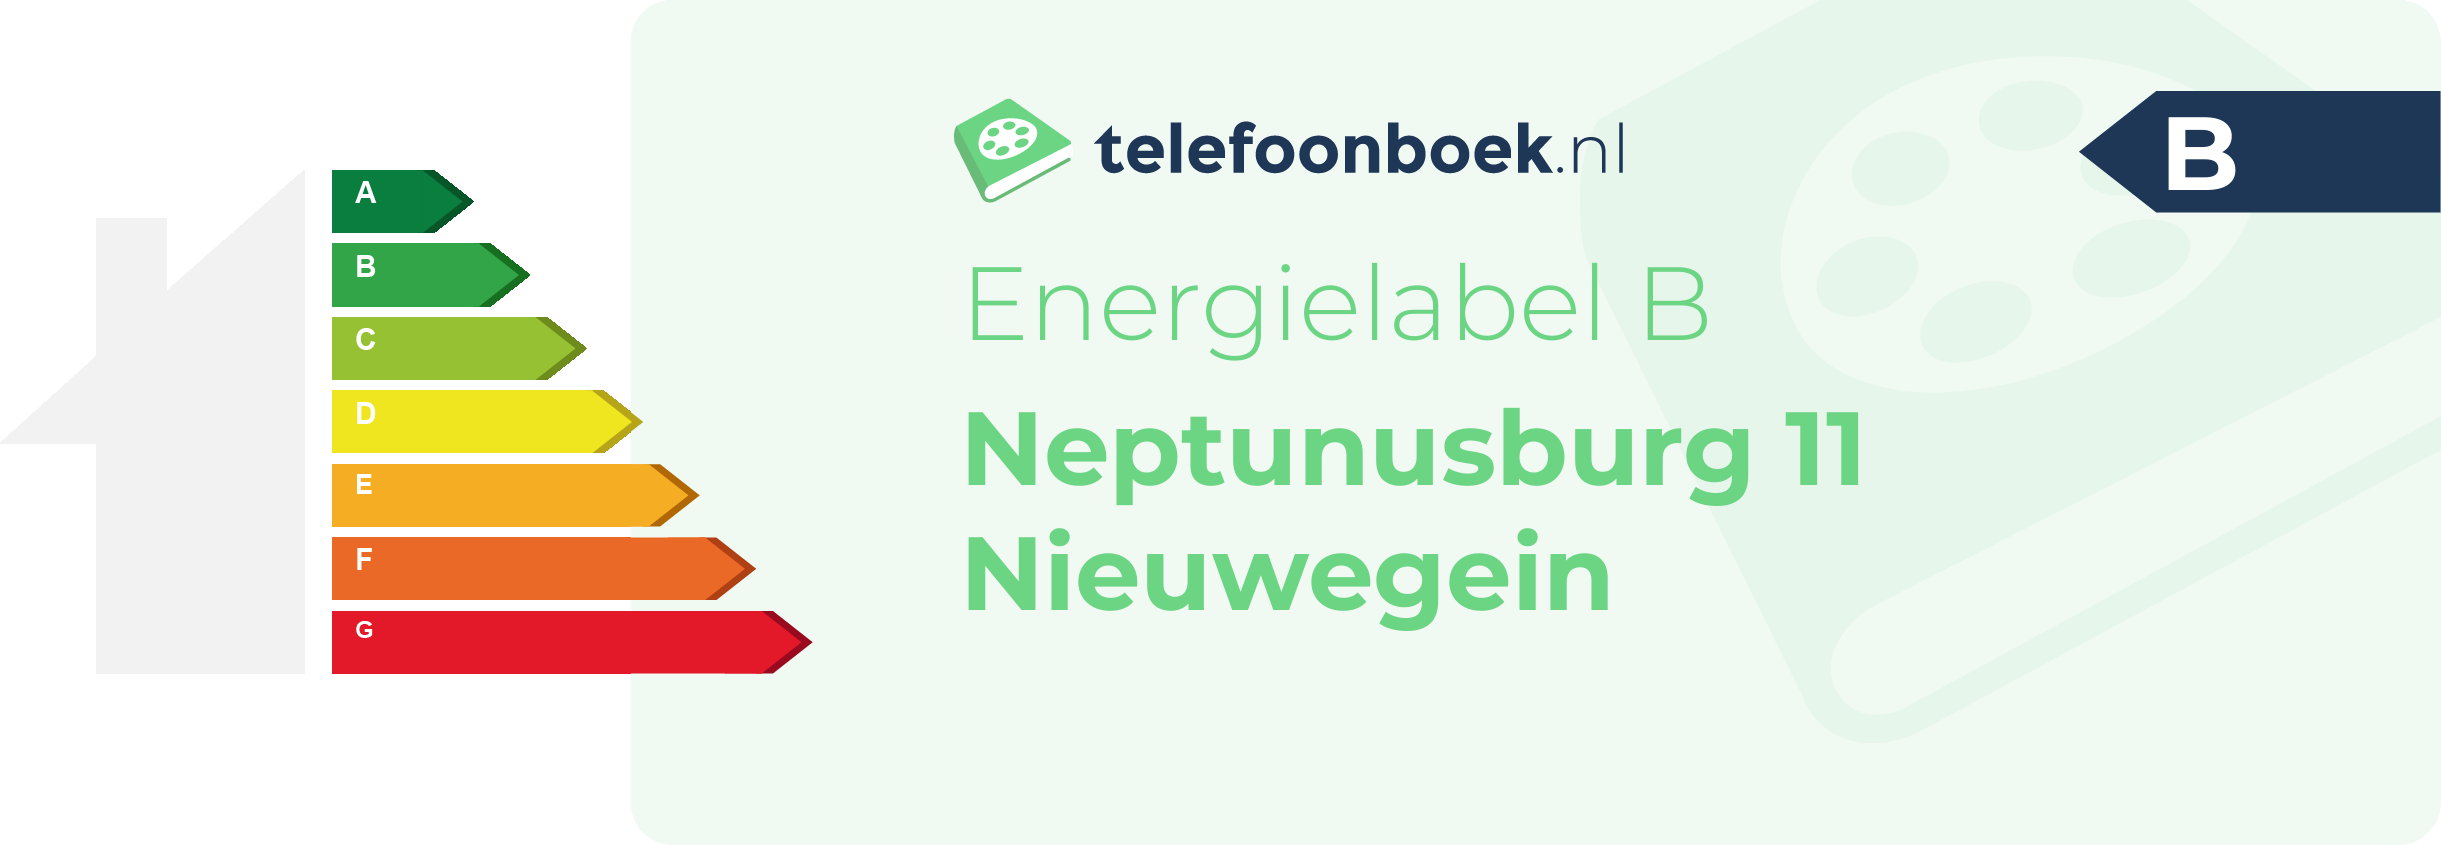 Energielabel Neptunusburg 11 Nieuwegein